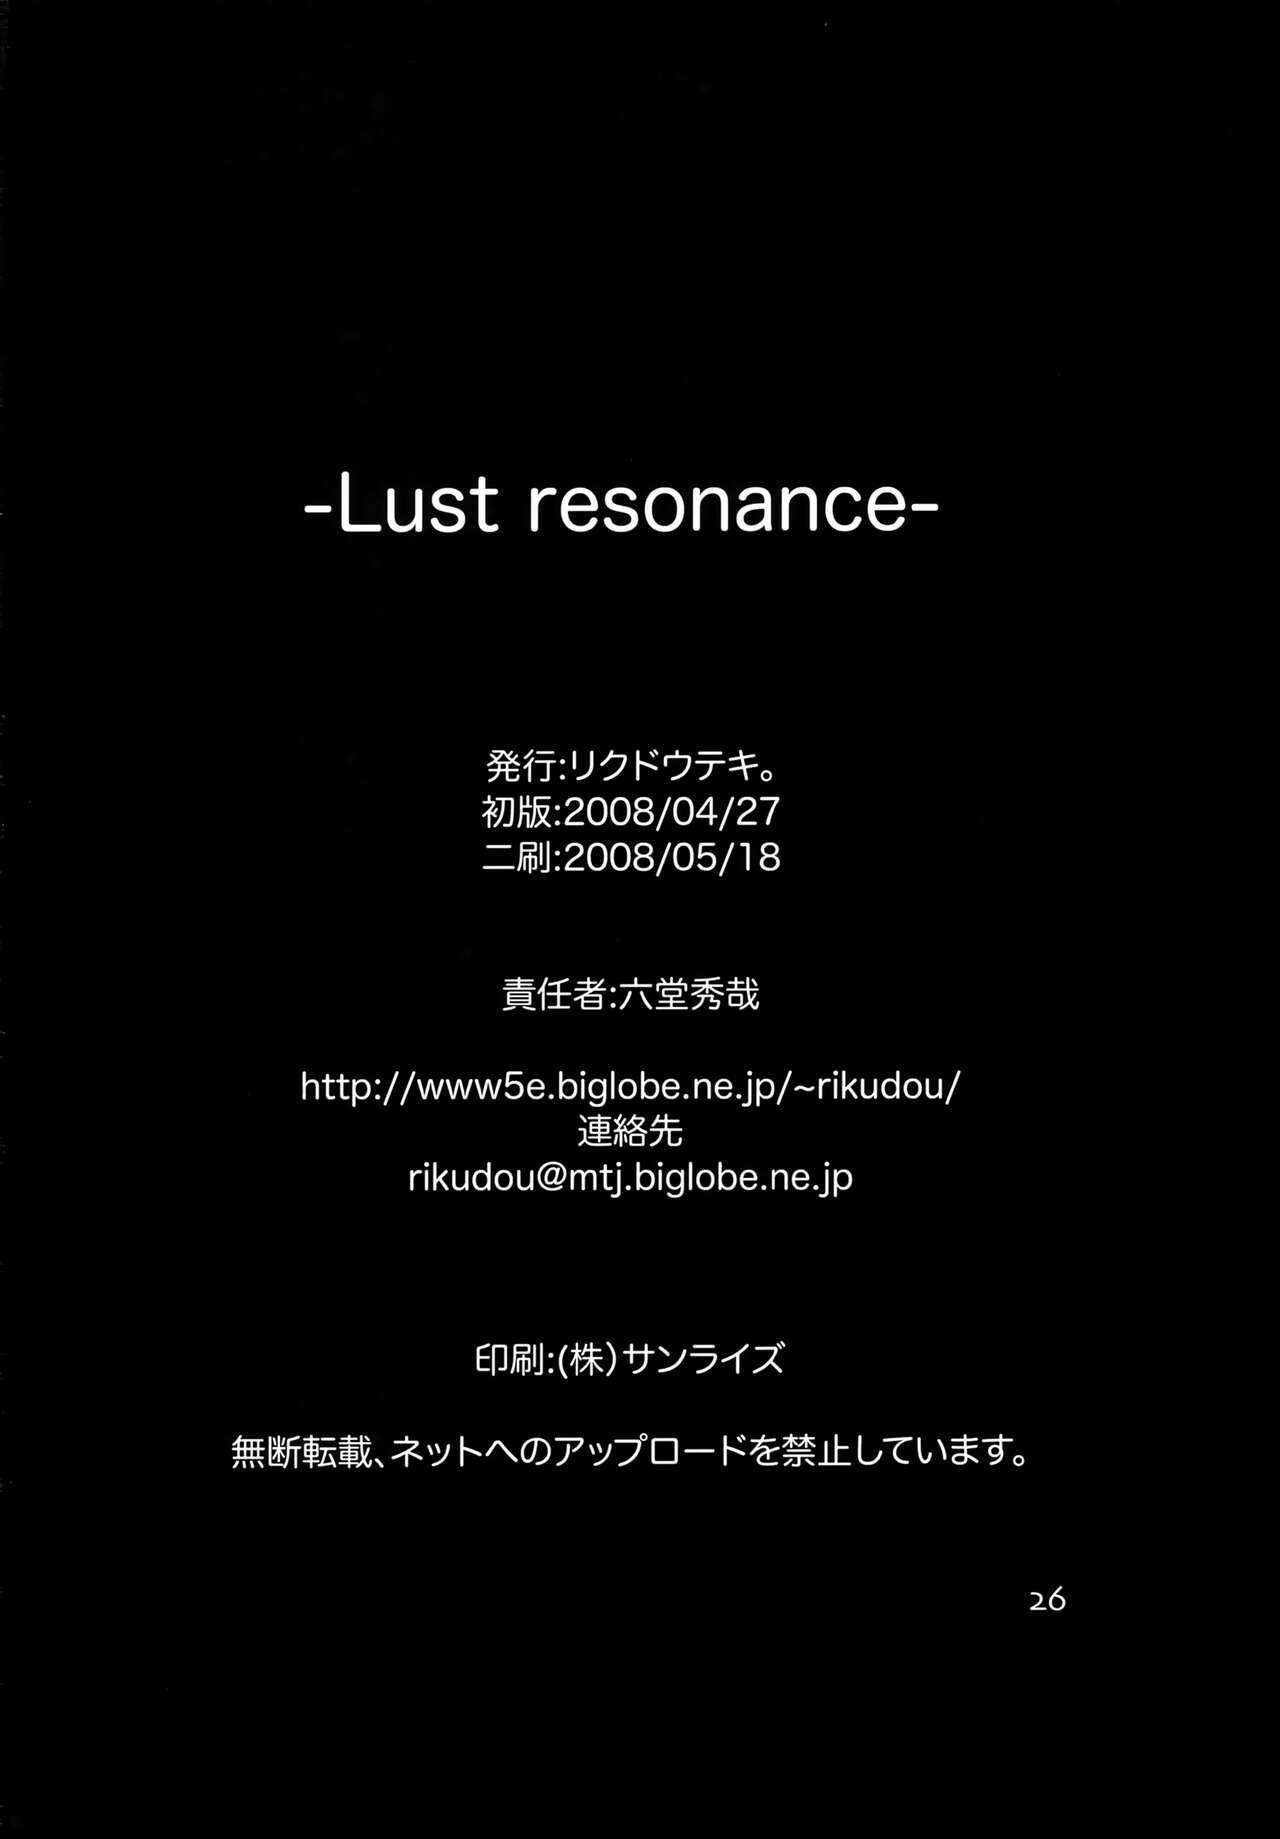 Lust resonance 24